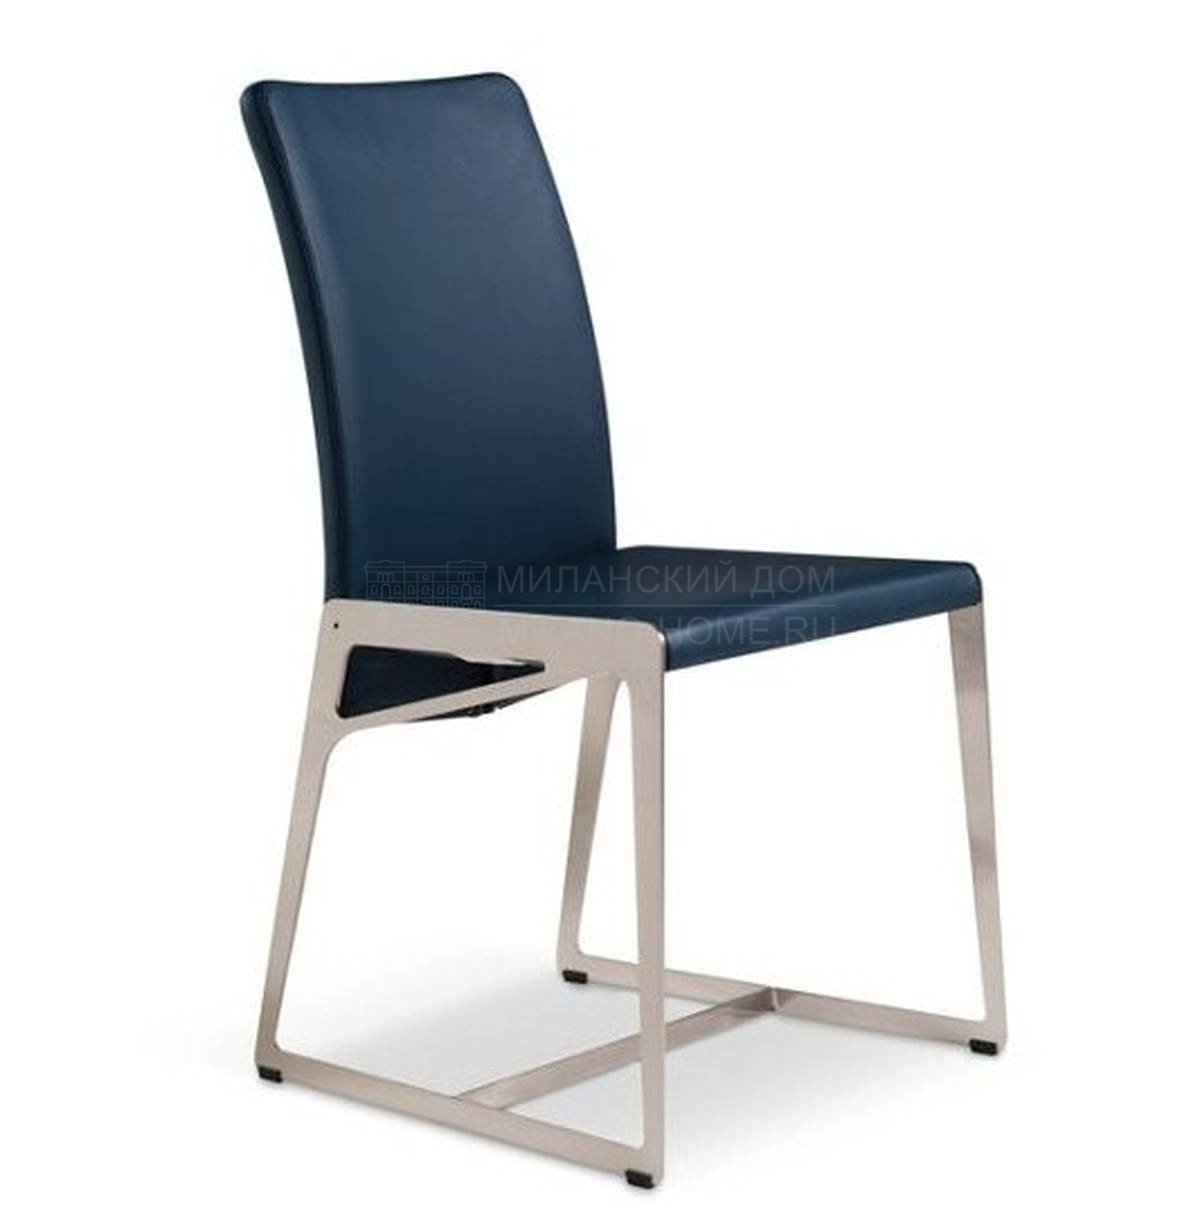 Стул Altitude chair из Франции фабрики ROCHE BOBOIS